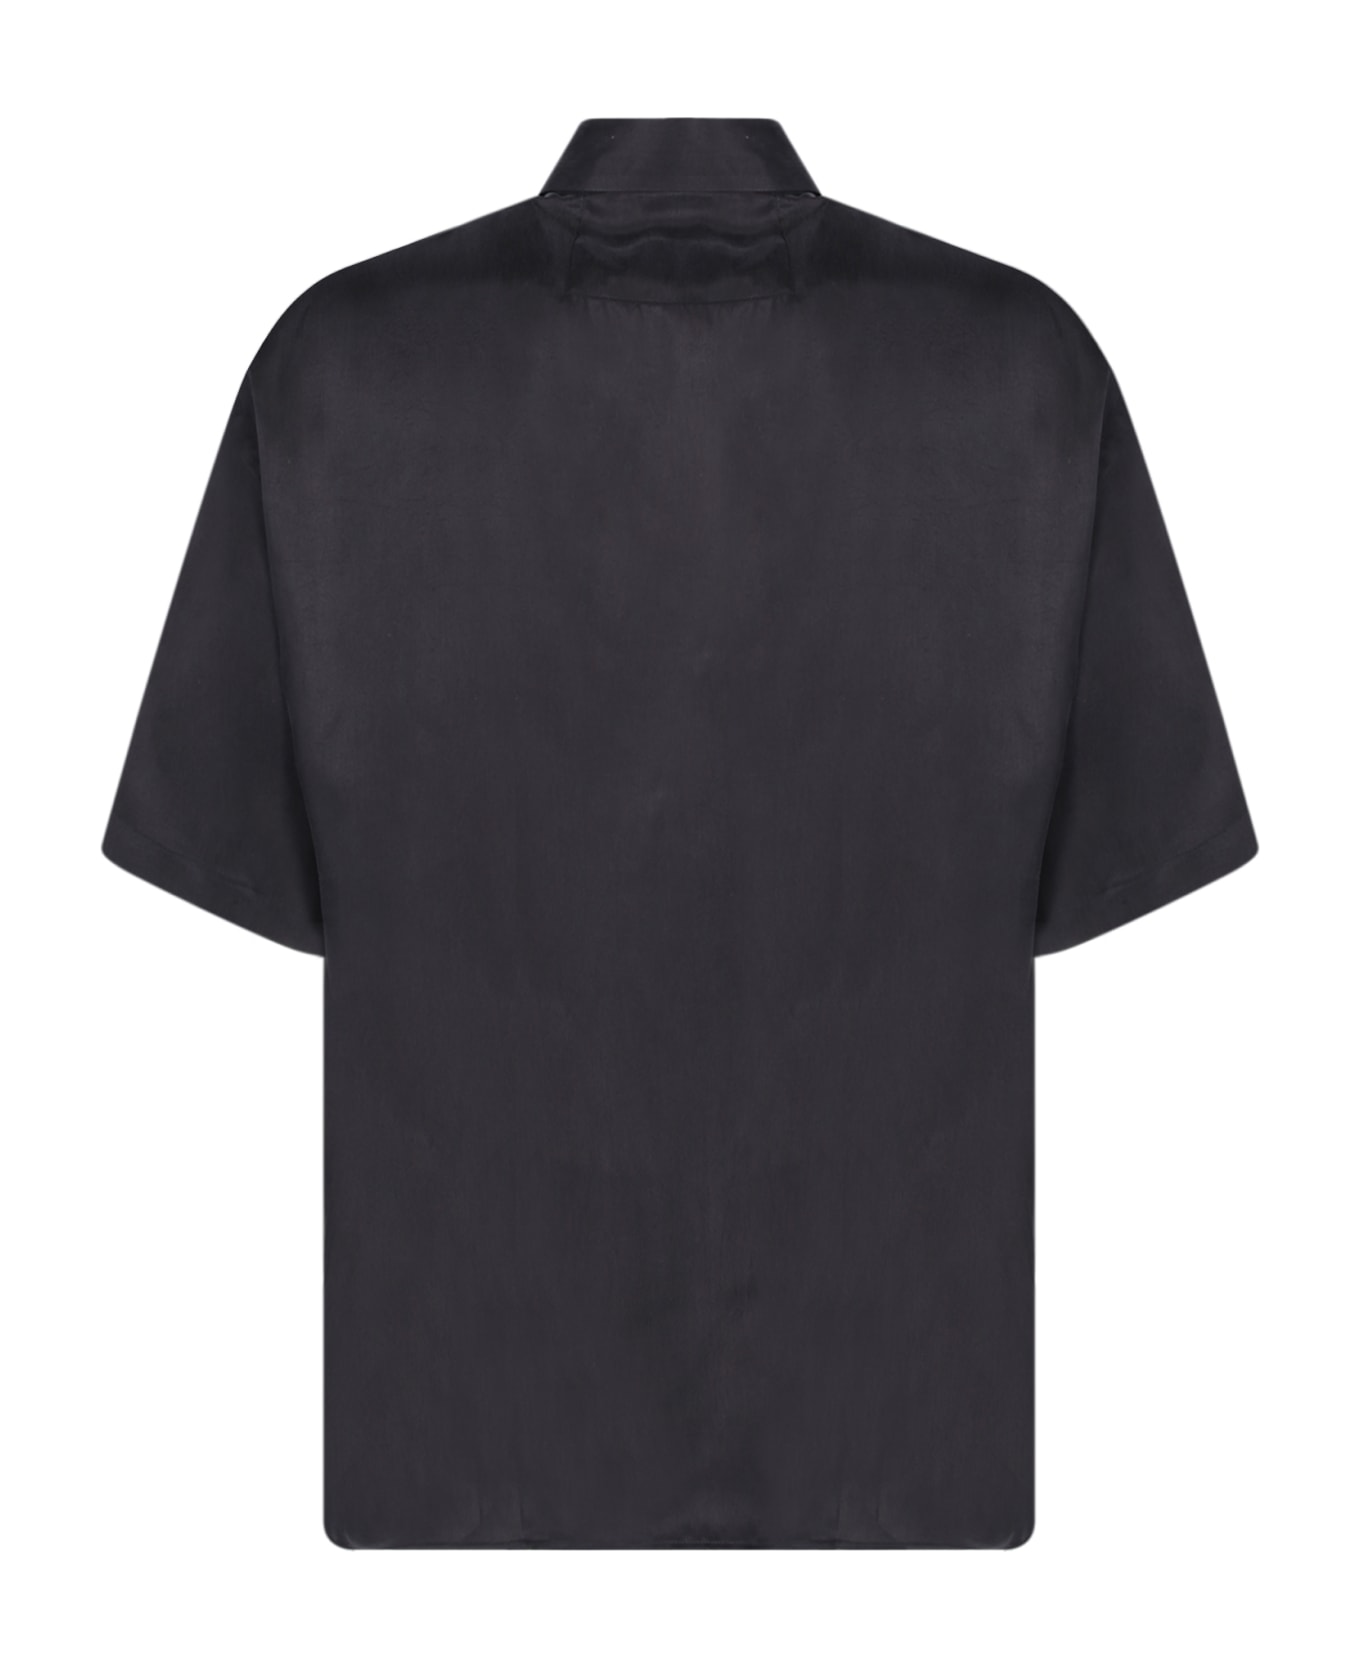 costumein Eric Black Shirt By Costumein - Black シャツ